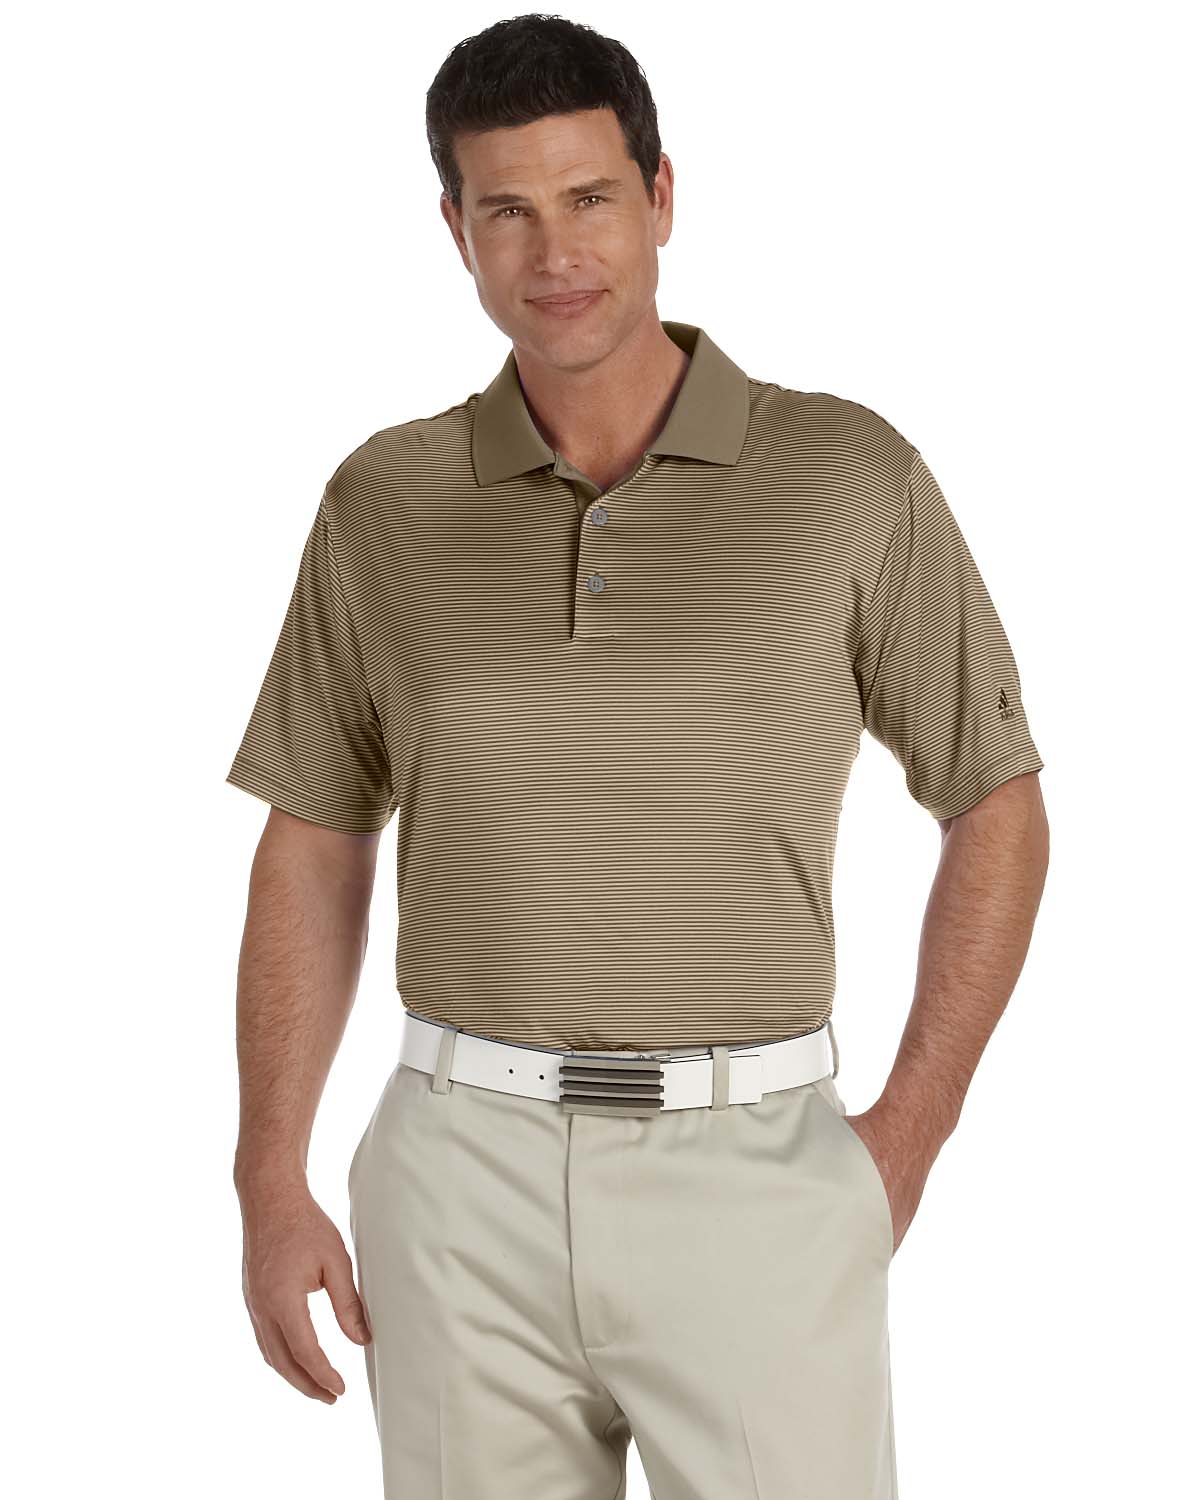 Adidas Golf Mens ClimaLite Classic Stripe Short Sleeve Polo Shirt S-3XL ...